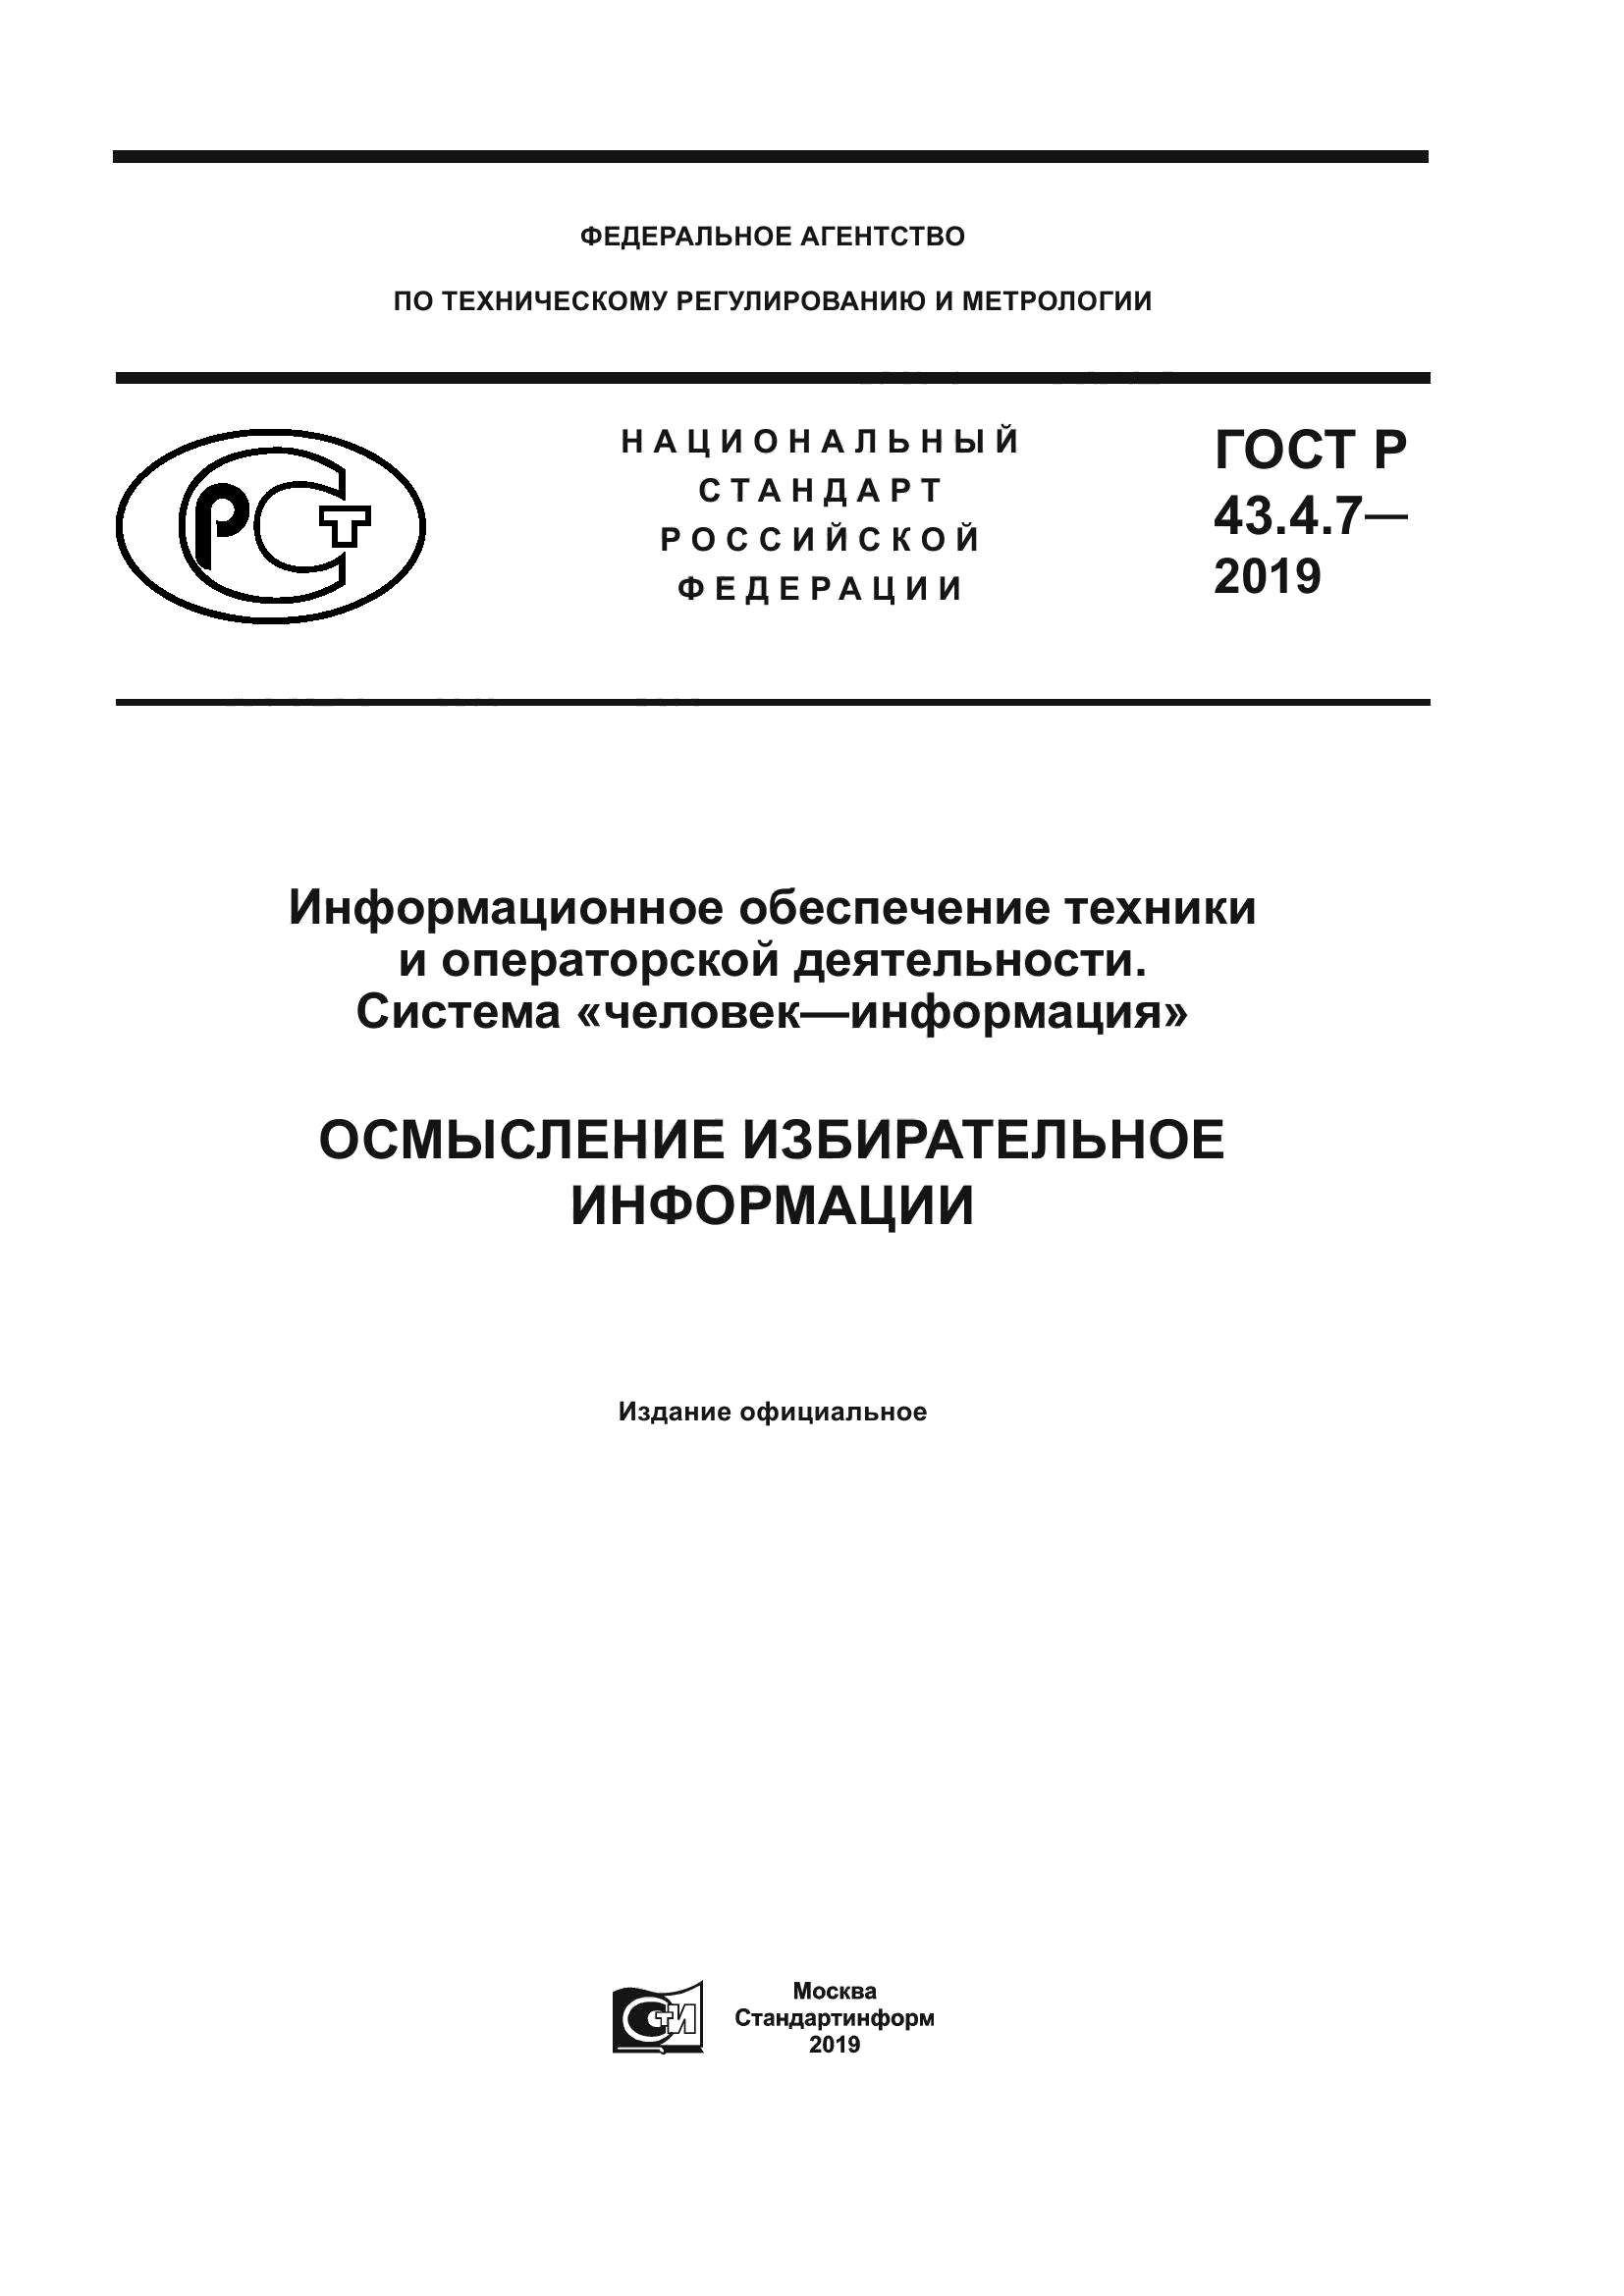 ГОСТ Р 43.4.7-2019